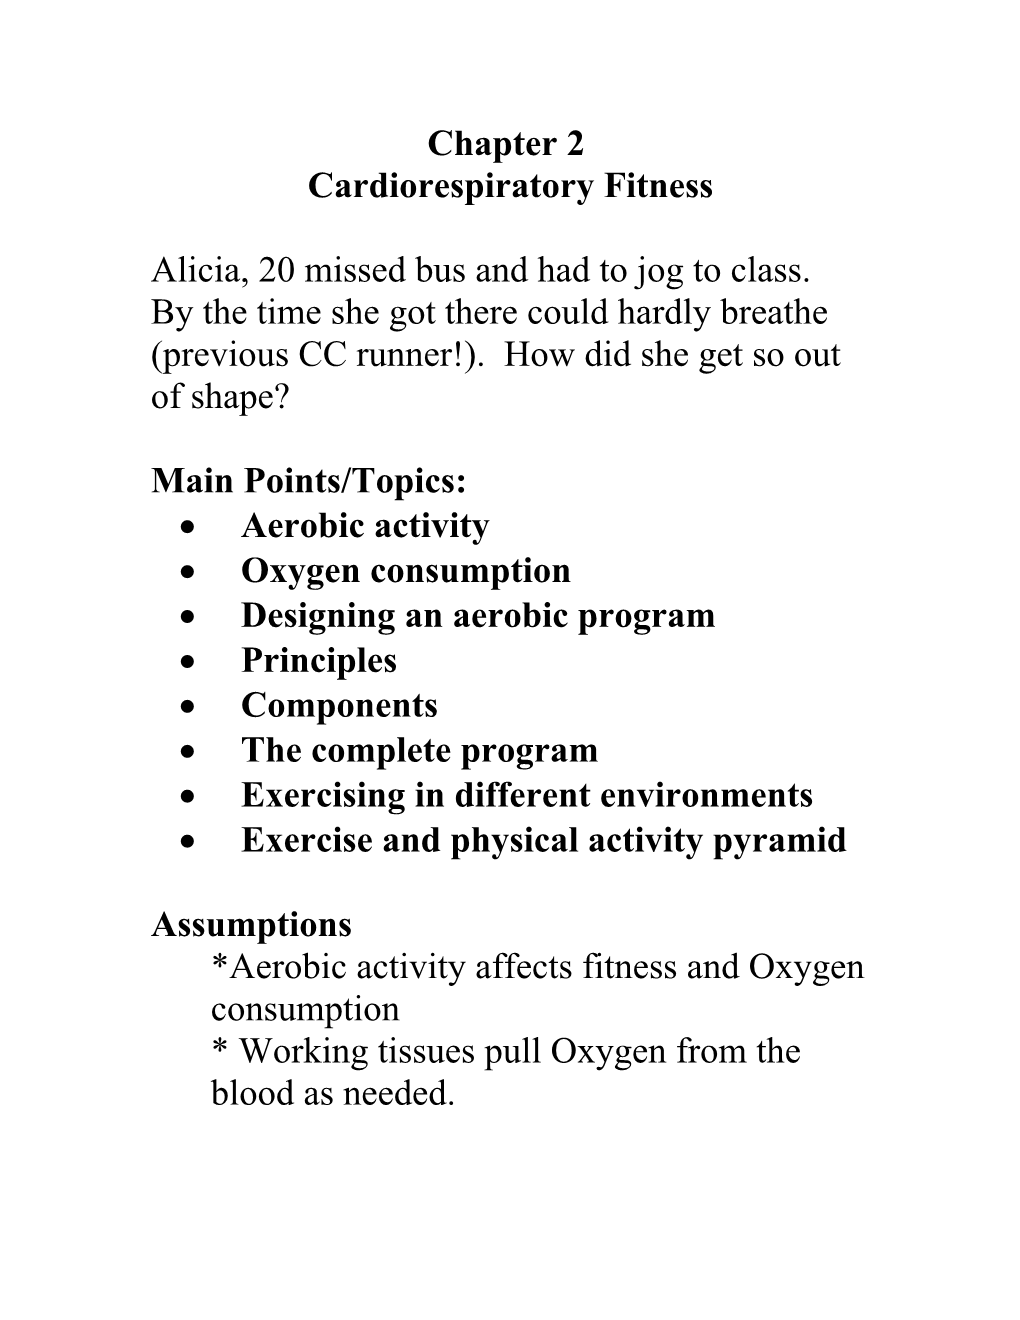 Cardiorespiratory Fitness